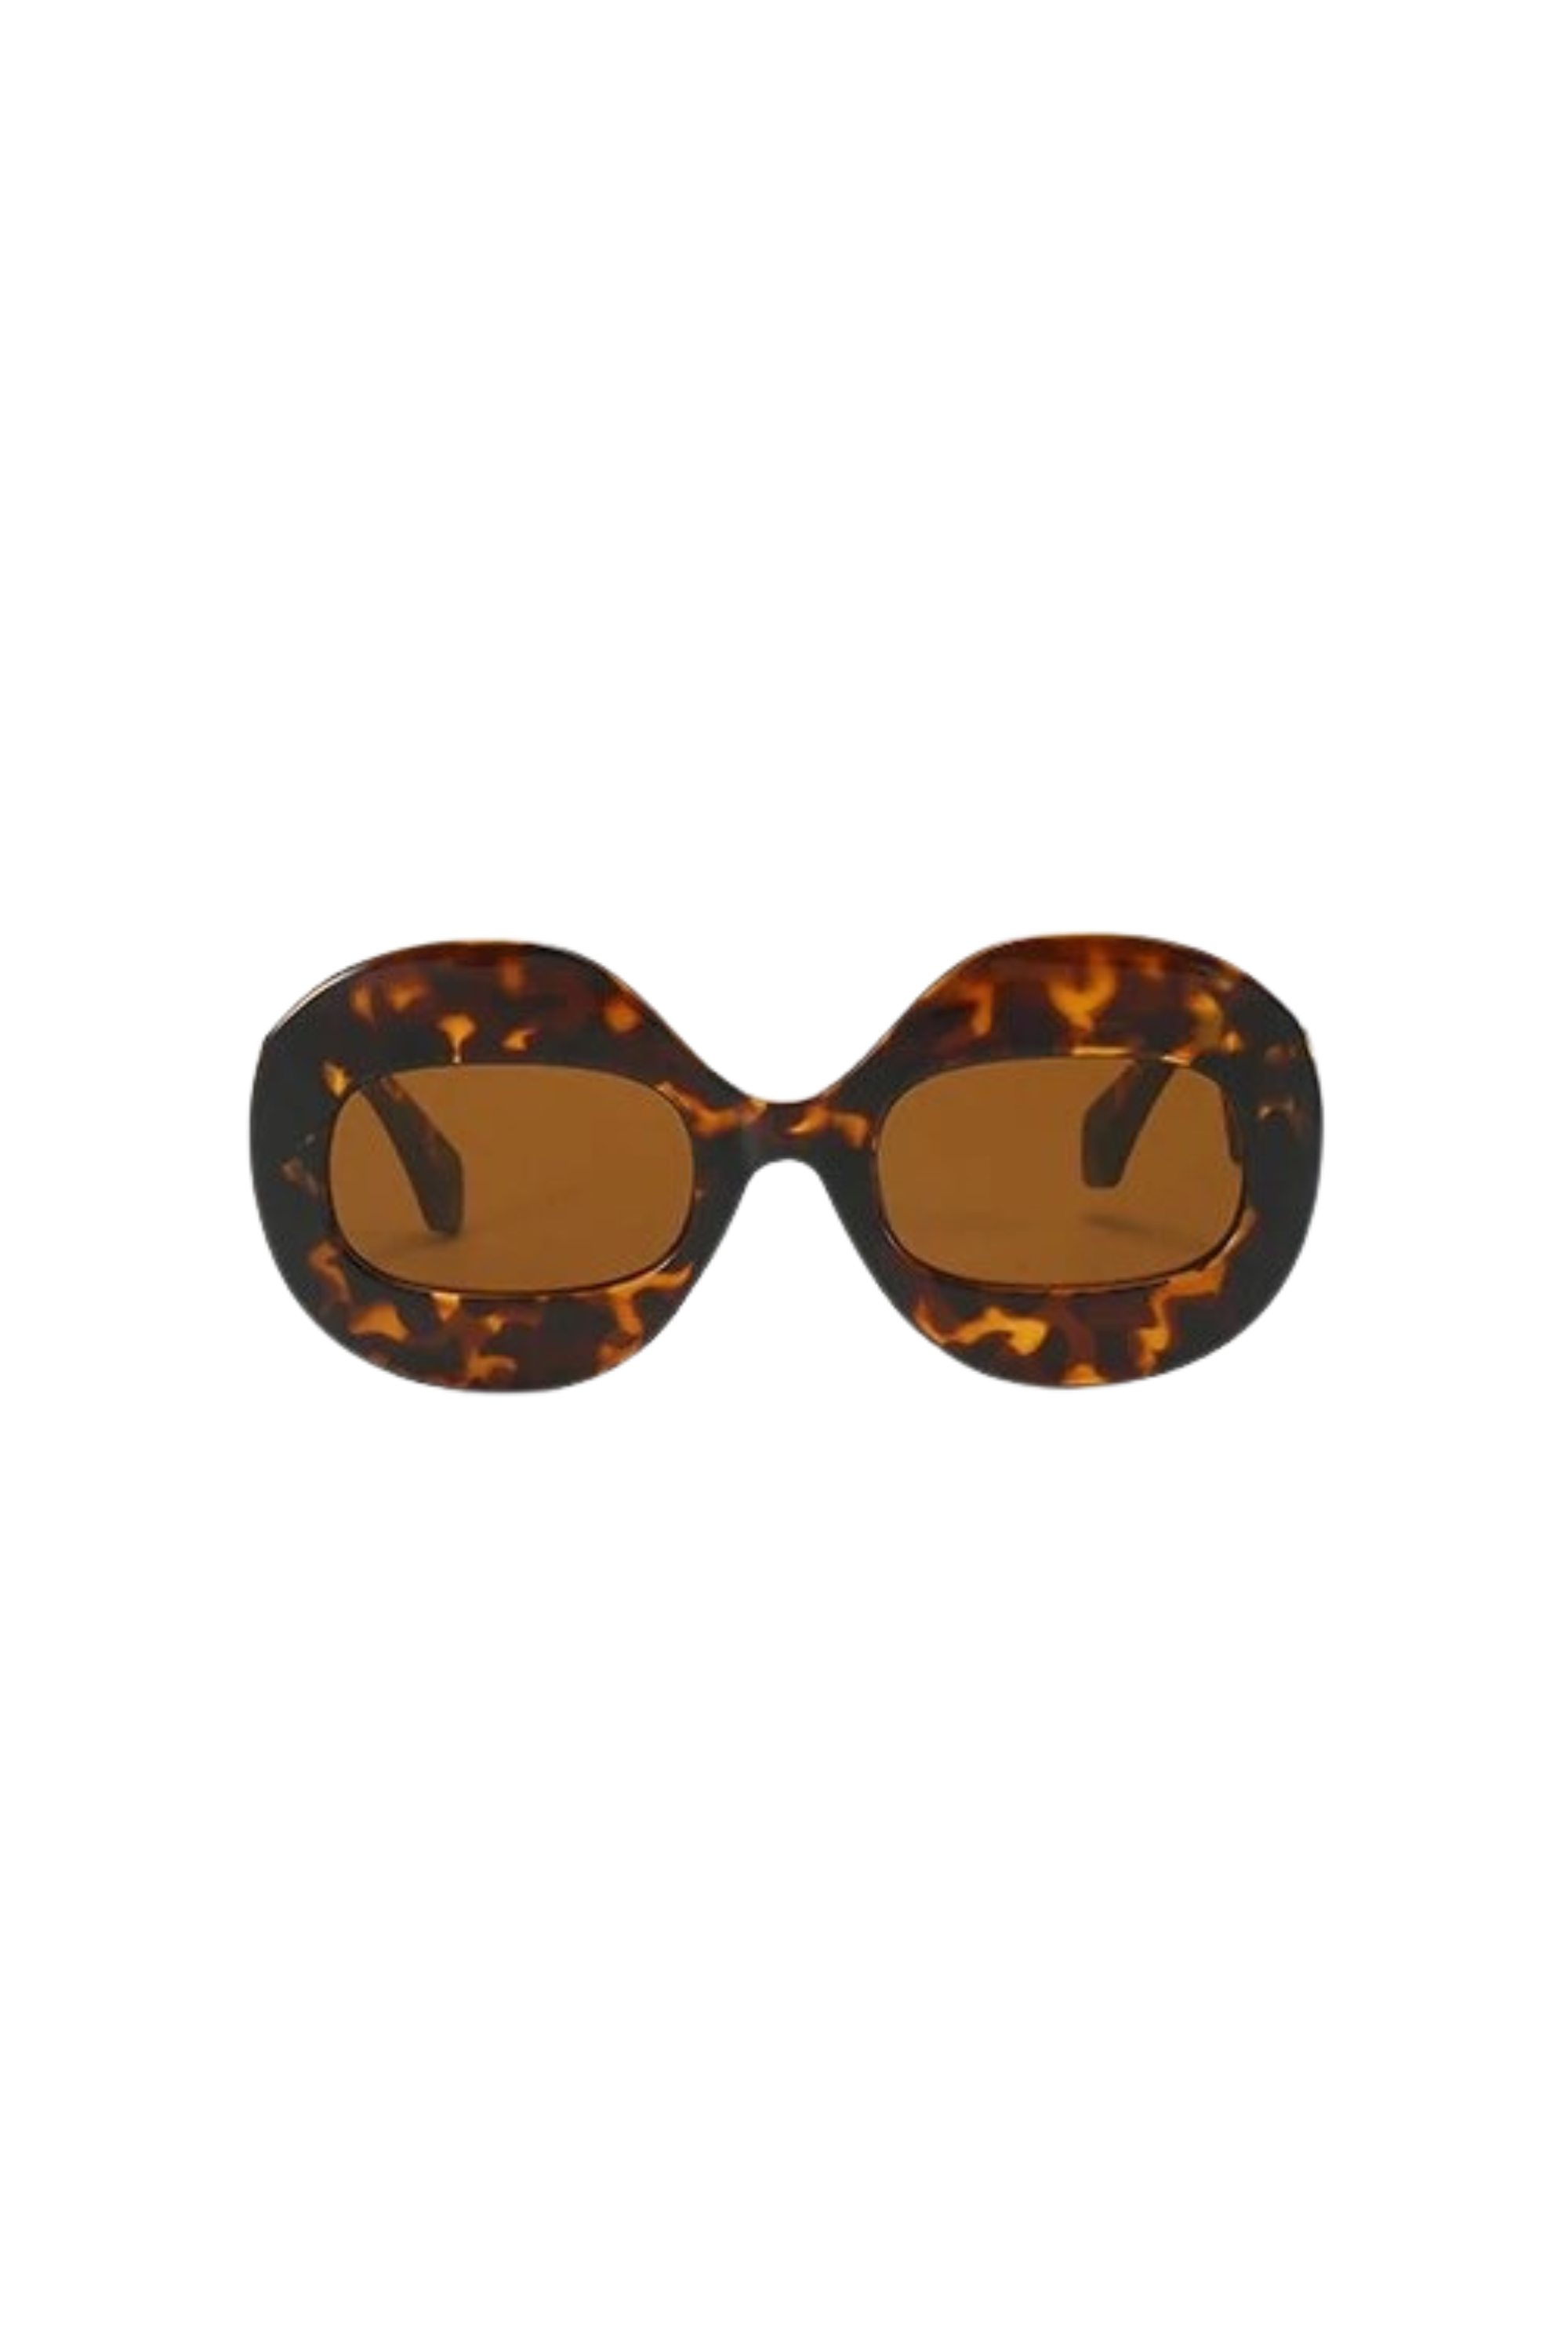 GOLDxTEAL modern tortoise cat eye sunglasses.